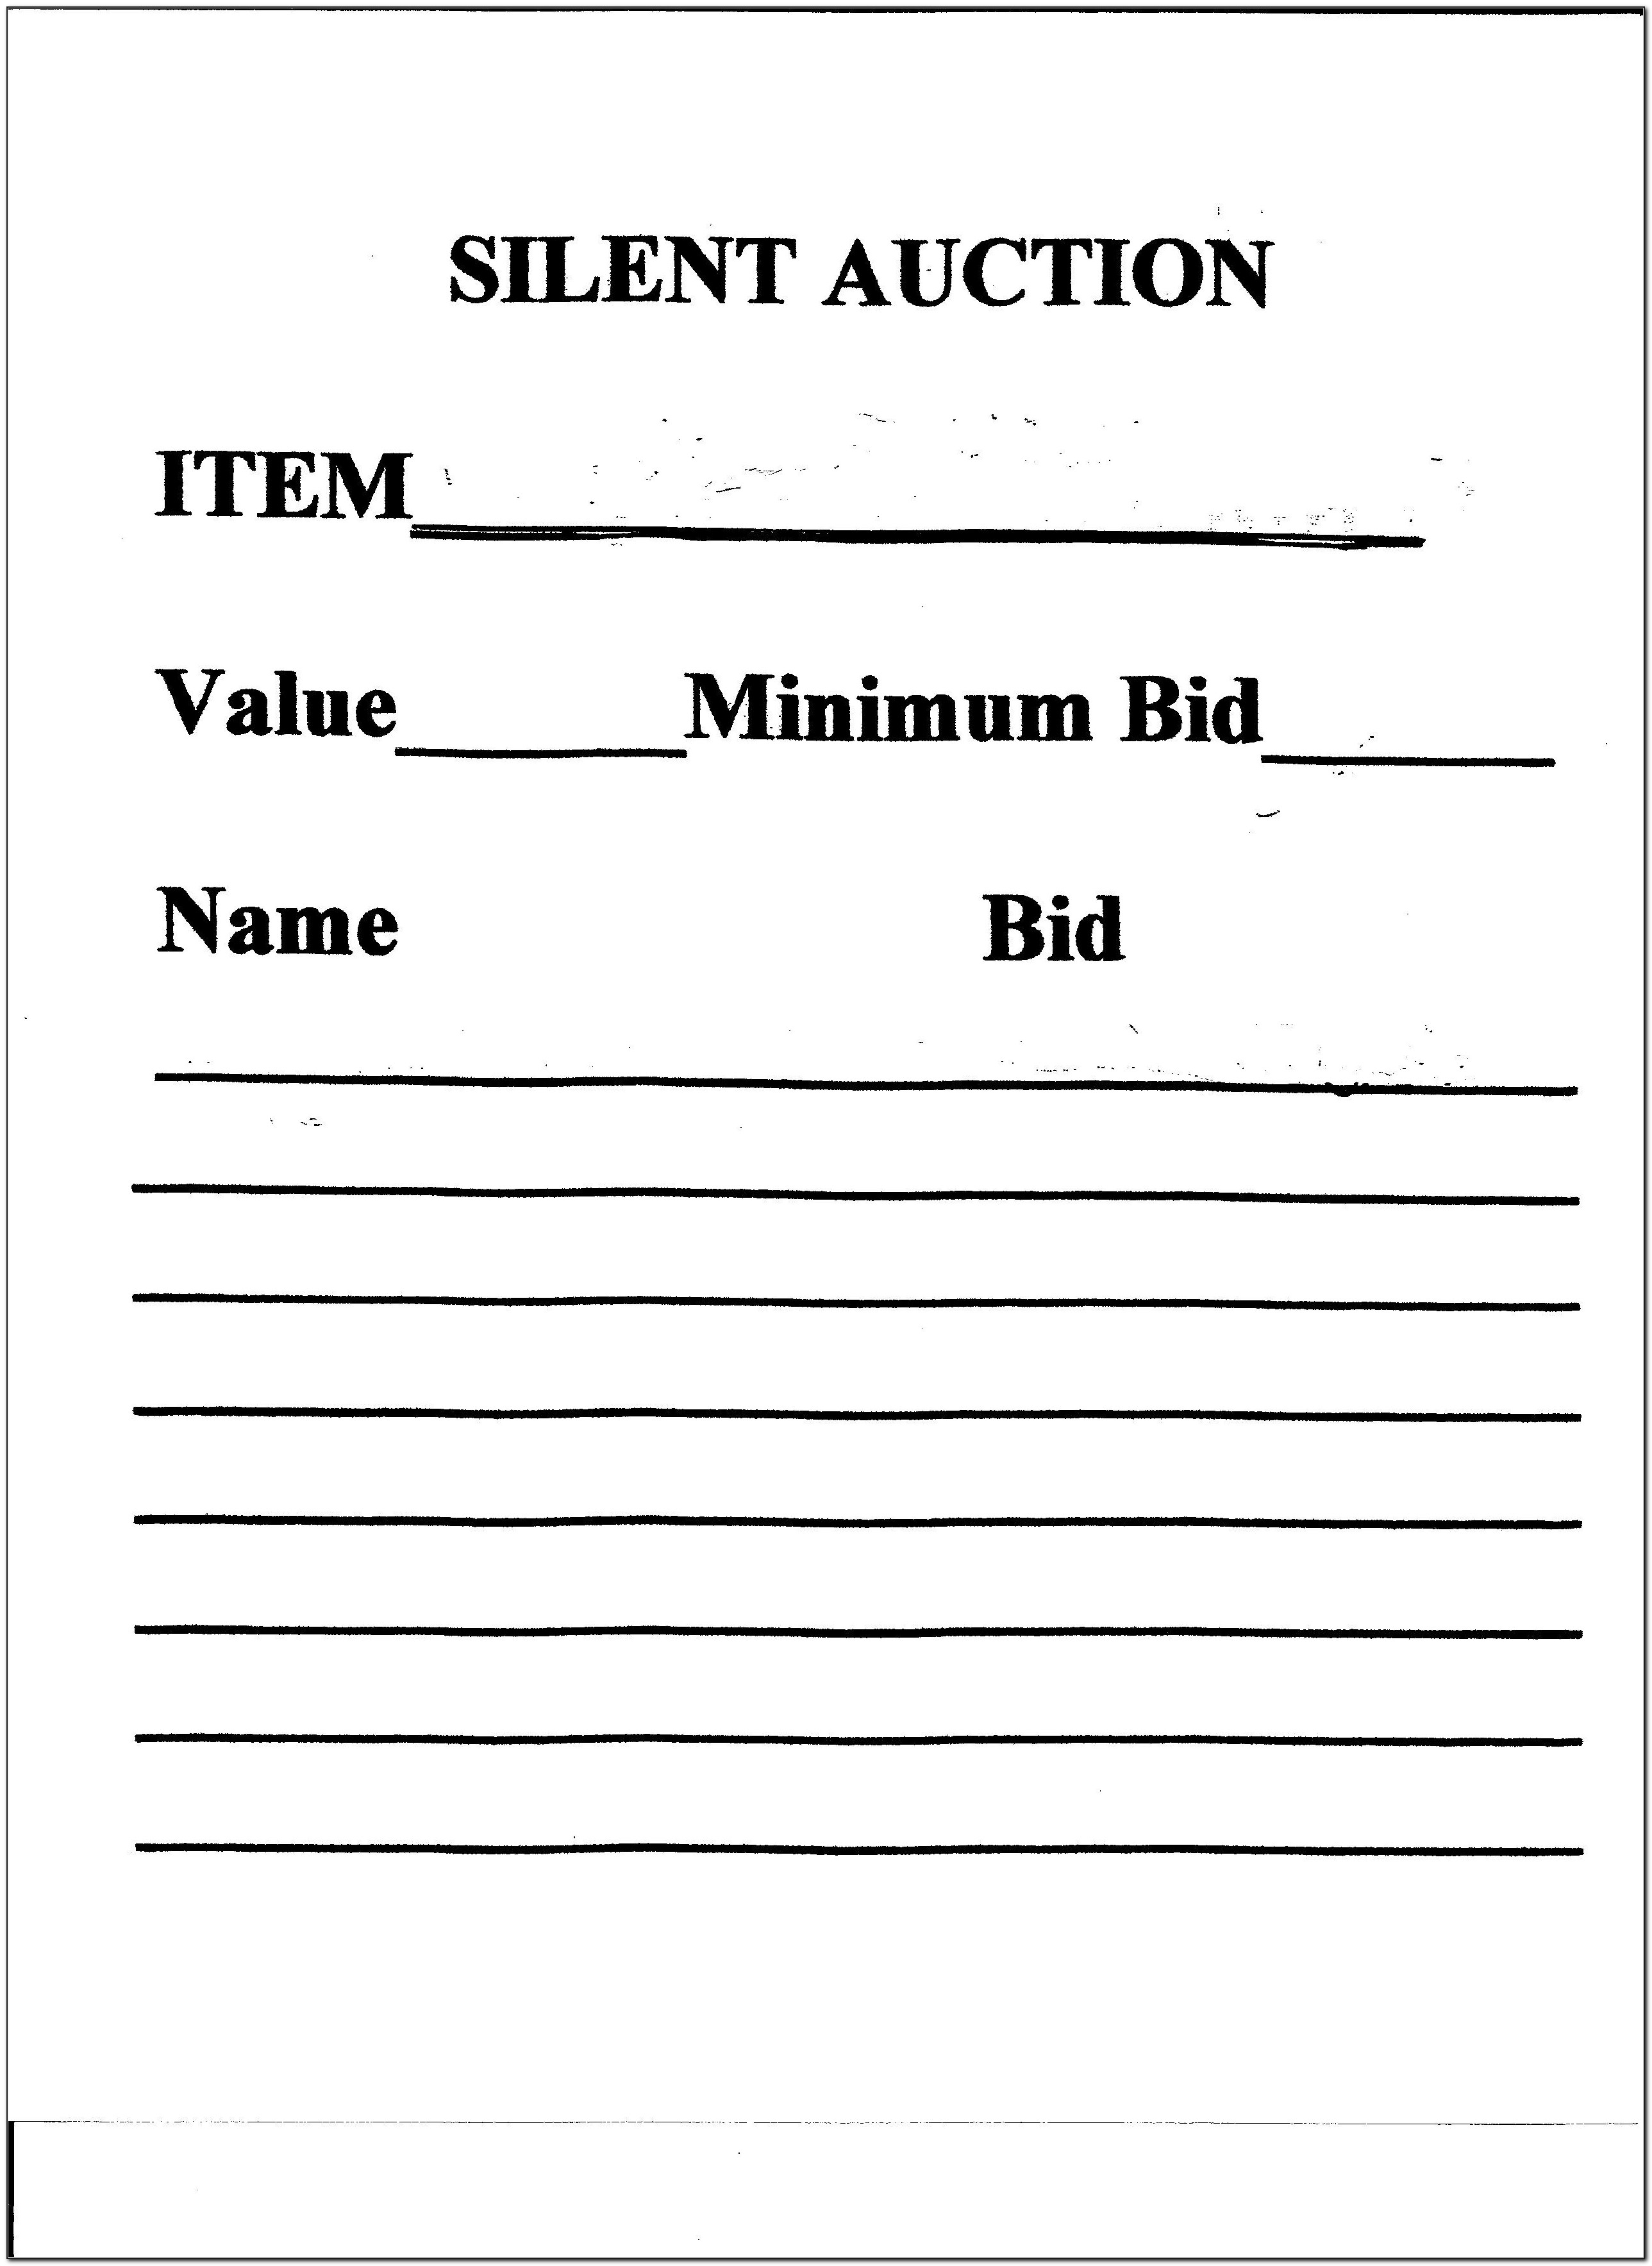 Silent Auction Bidding Sheet Sample